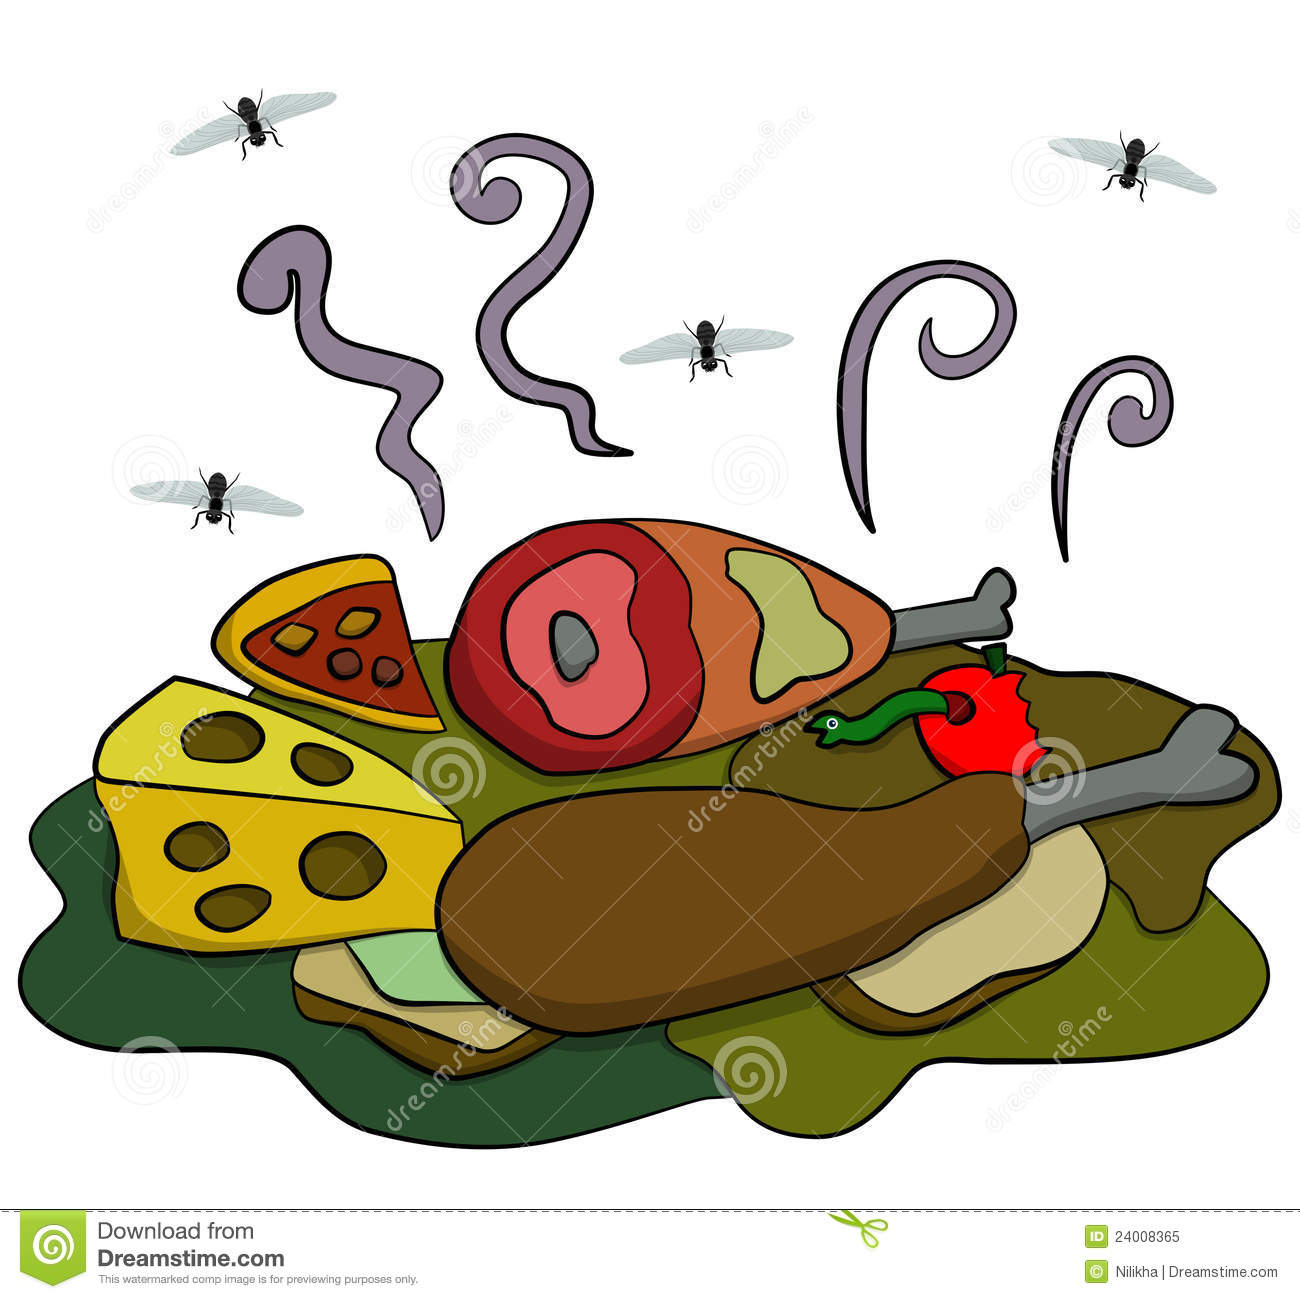 Humorous Cartoon Illustration Of Rotting Food With Flies